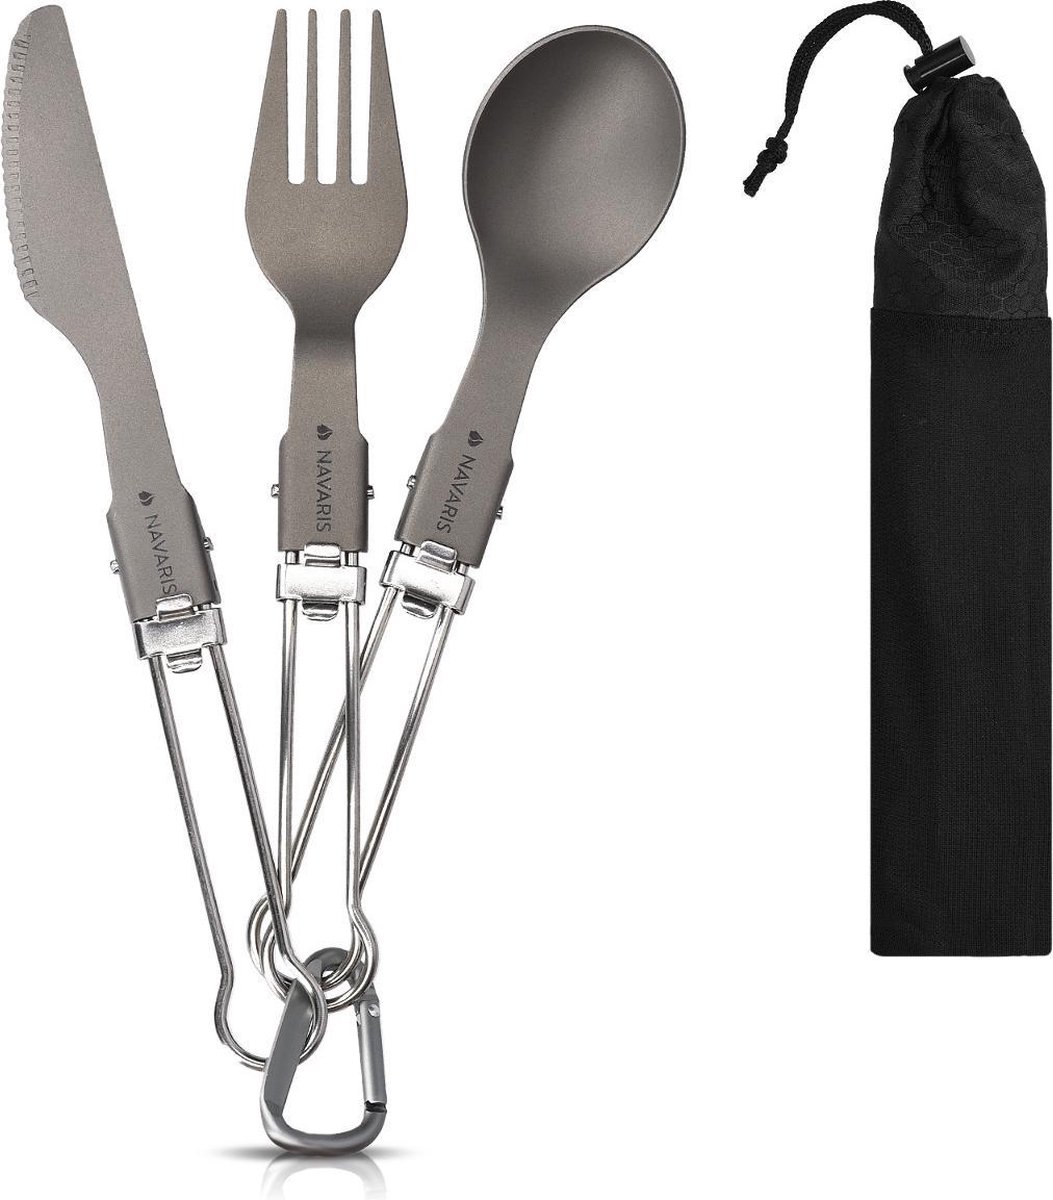 Navaris campingbestek van titanium - Set met vork, mes en lepel - Inklapbaar - Bestekset voor onderweg - Inclusief karabijnhaak en bewaarzakje